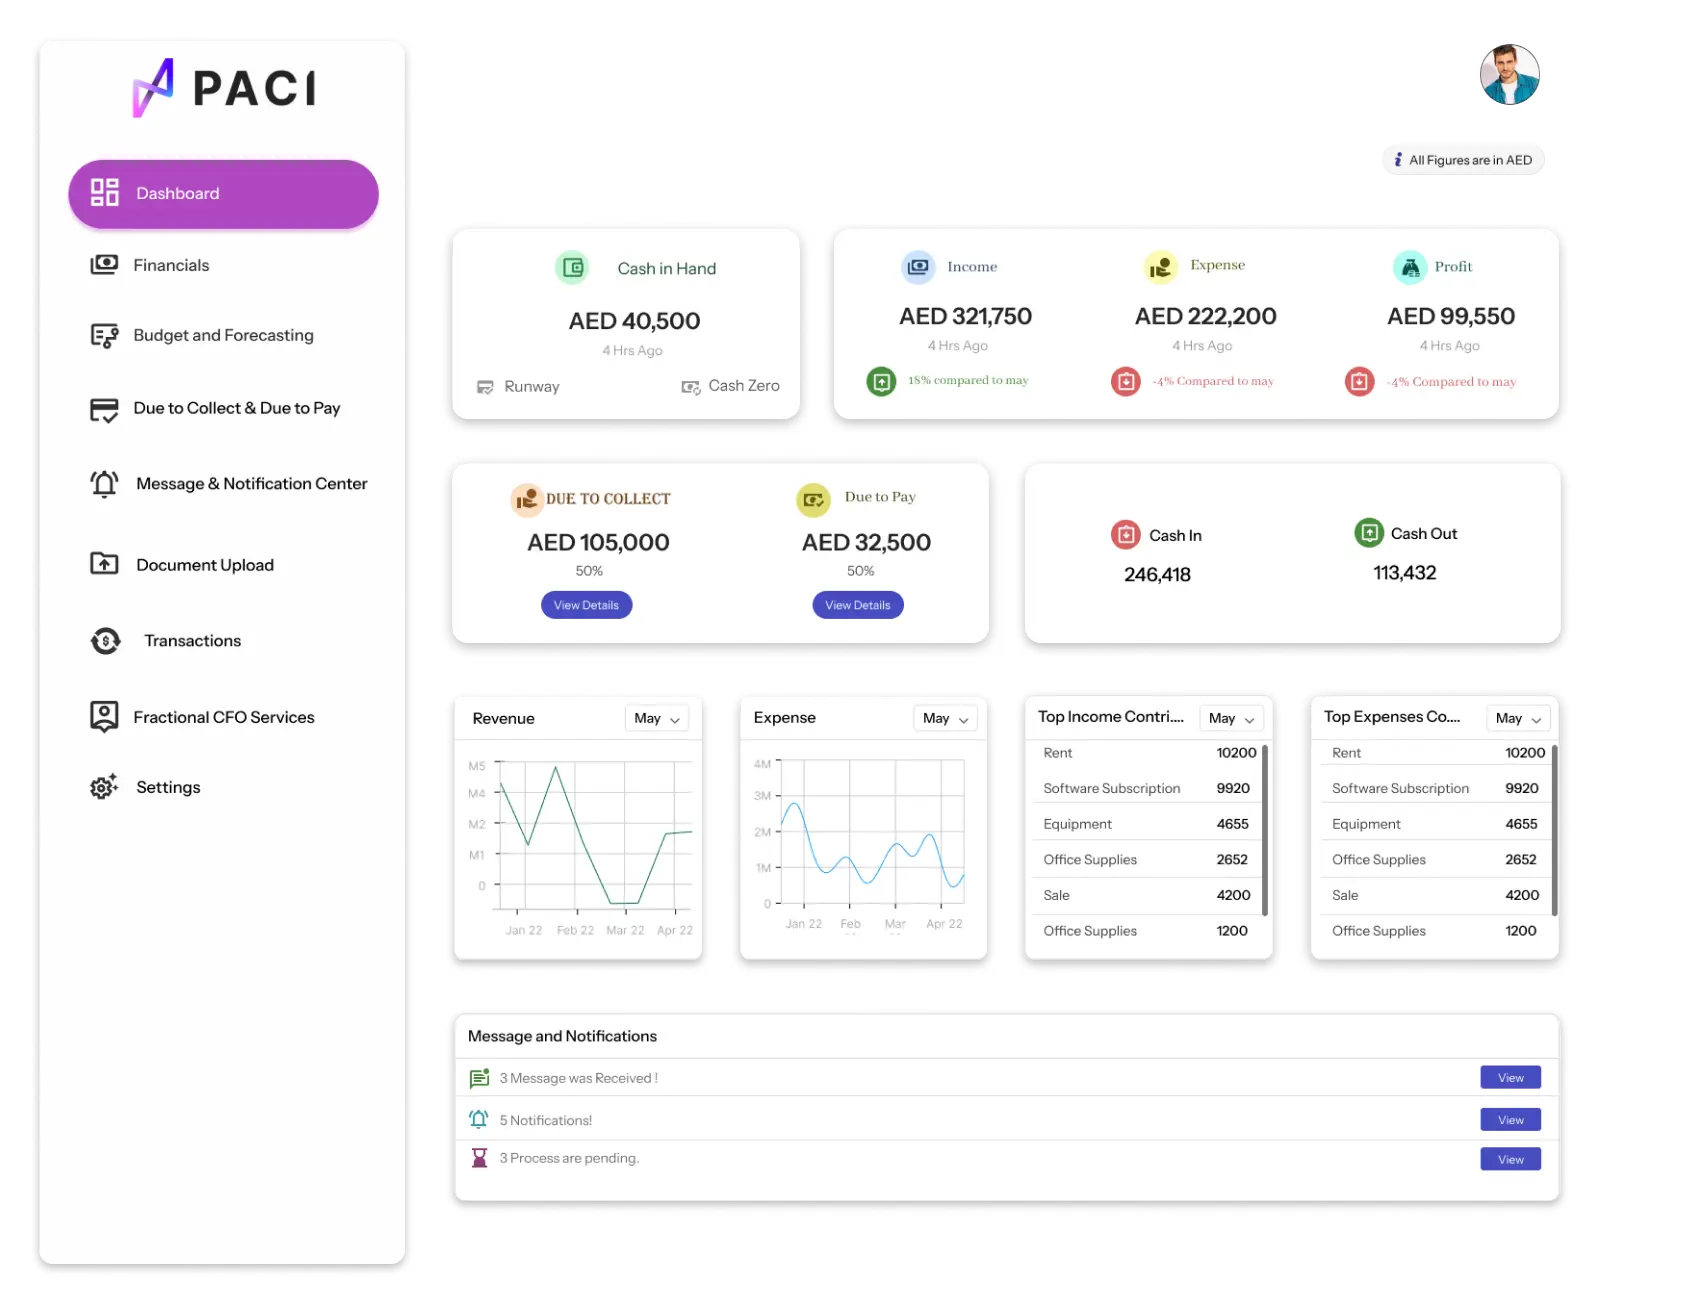 Paci accounting software dashboard showcasing financial metrics and performance indicators.